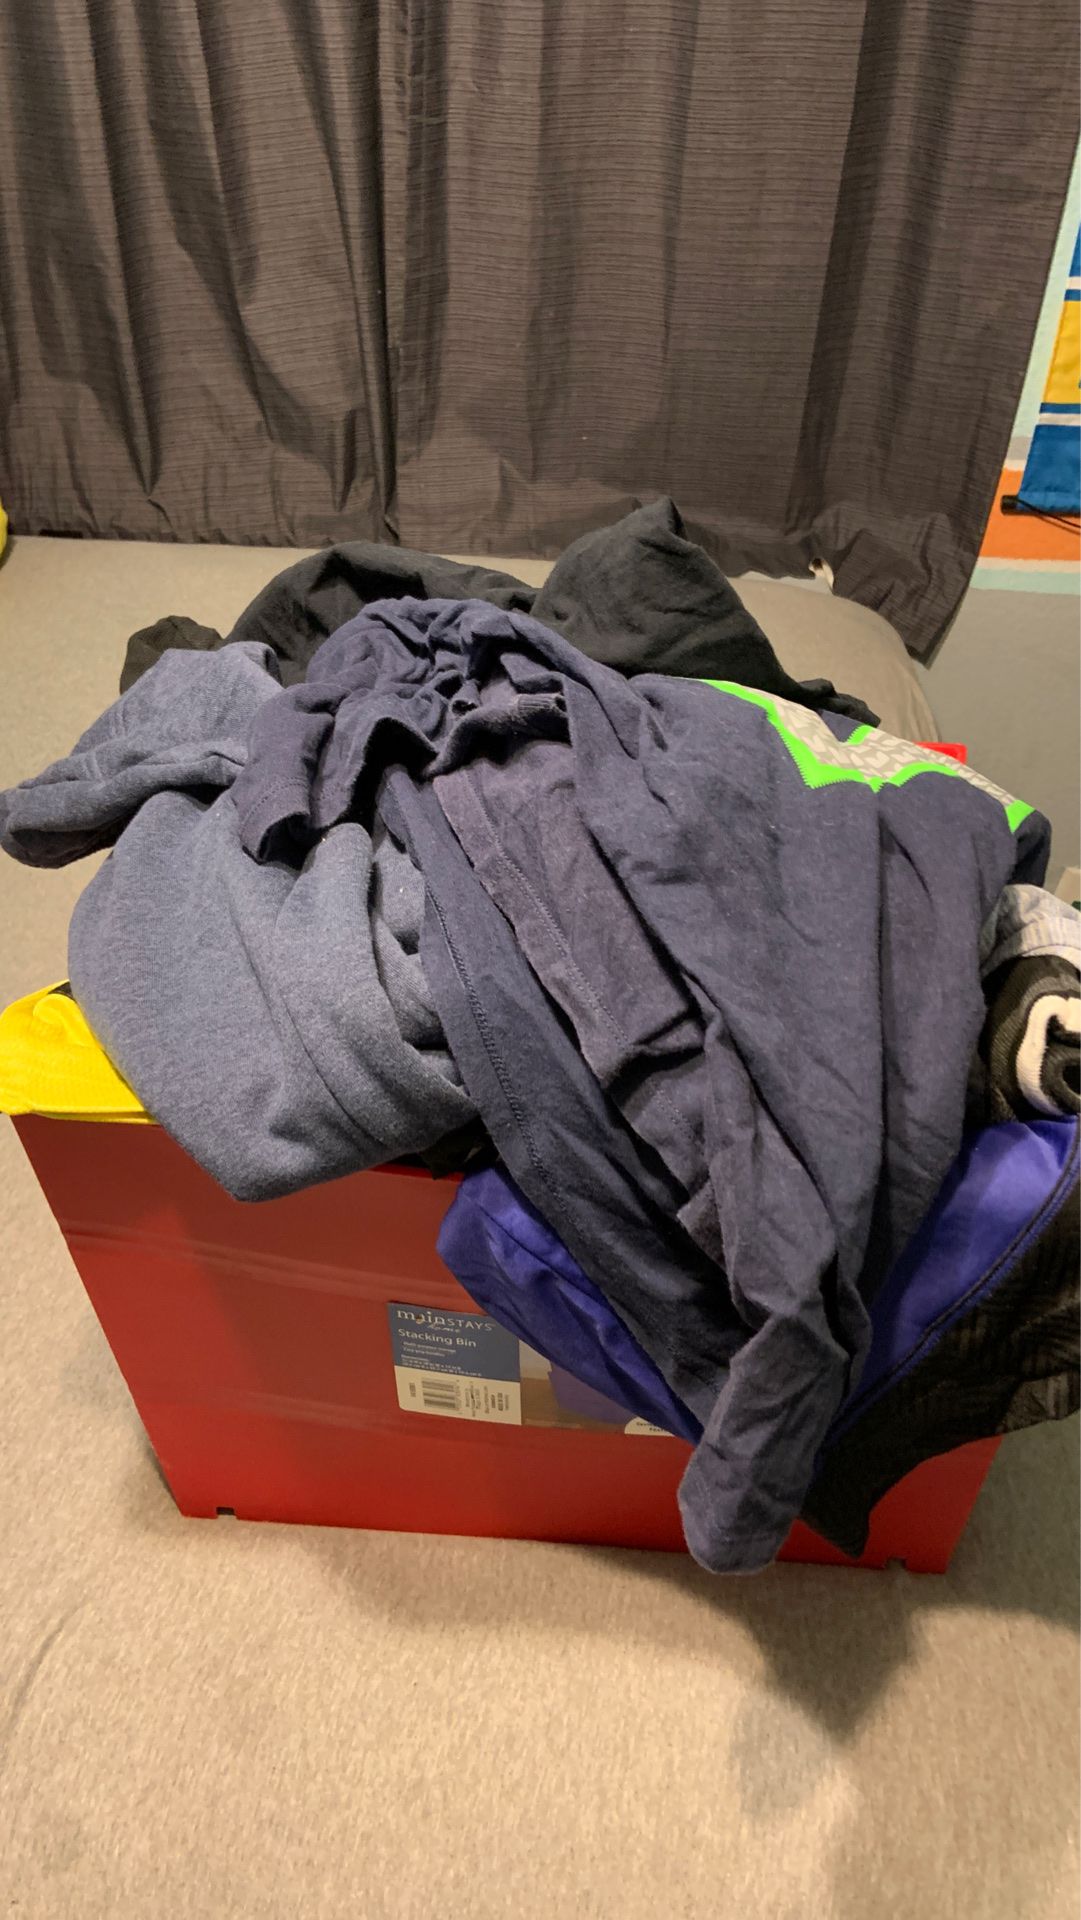 Full bin of men’s clothes large